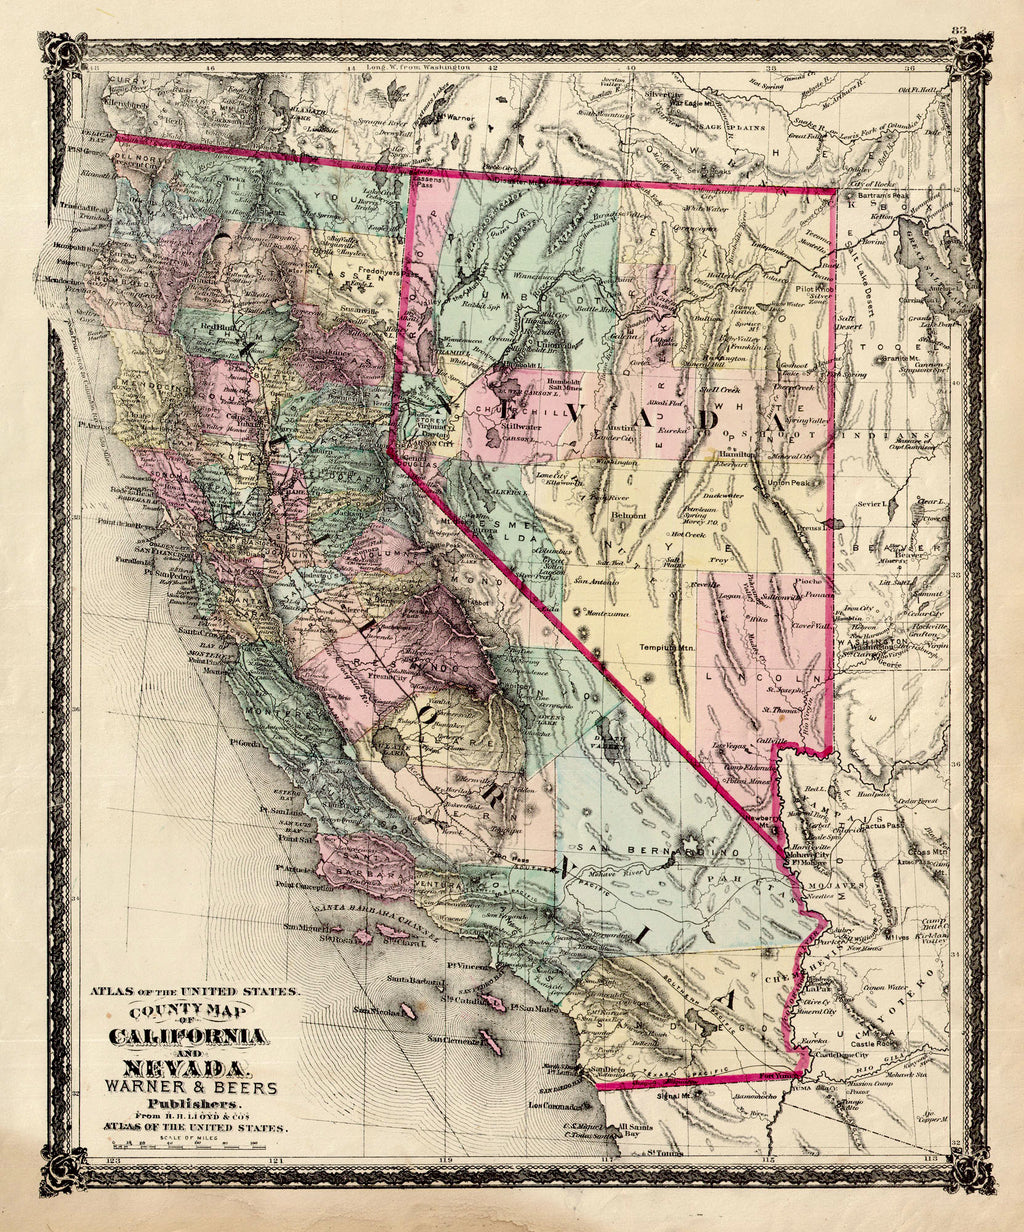 (CA., NV.) County Map of California and Nevada